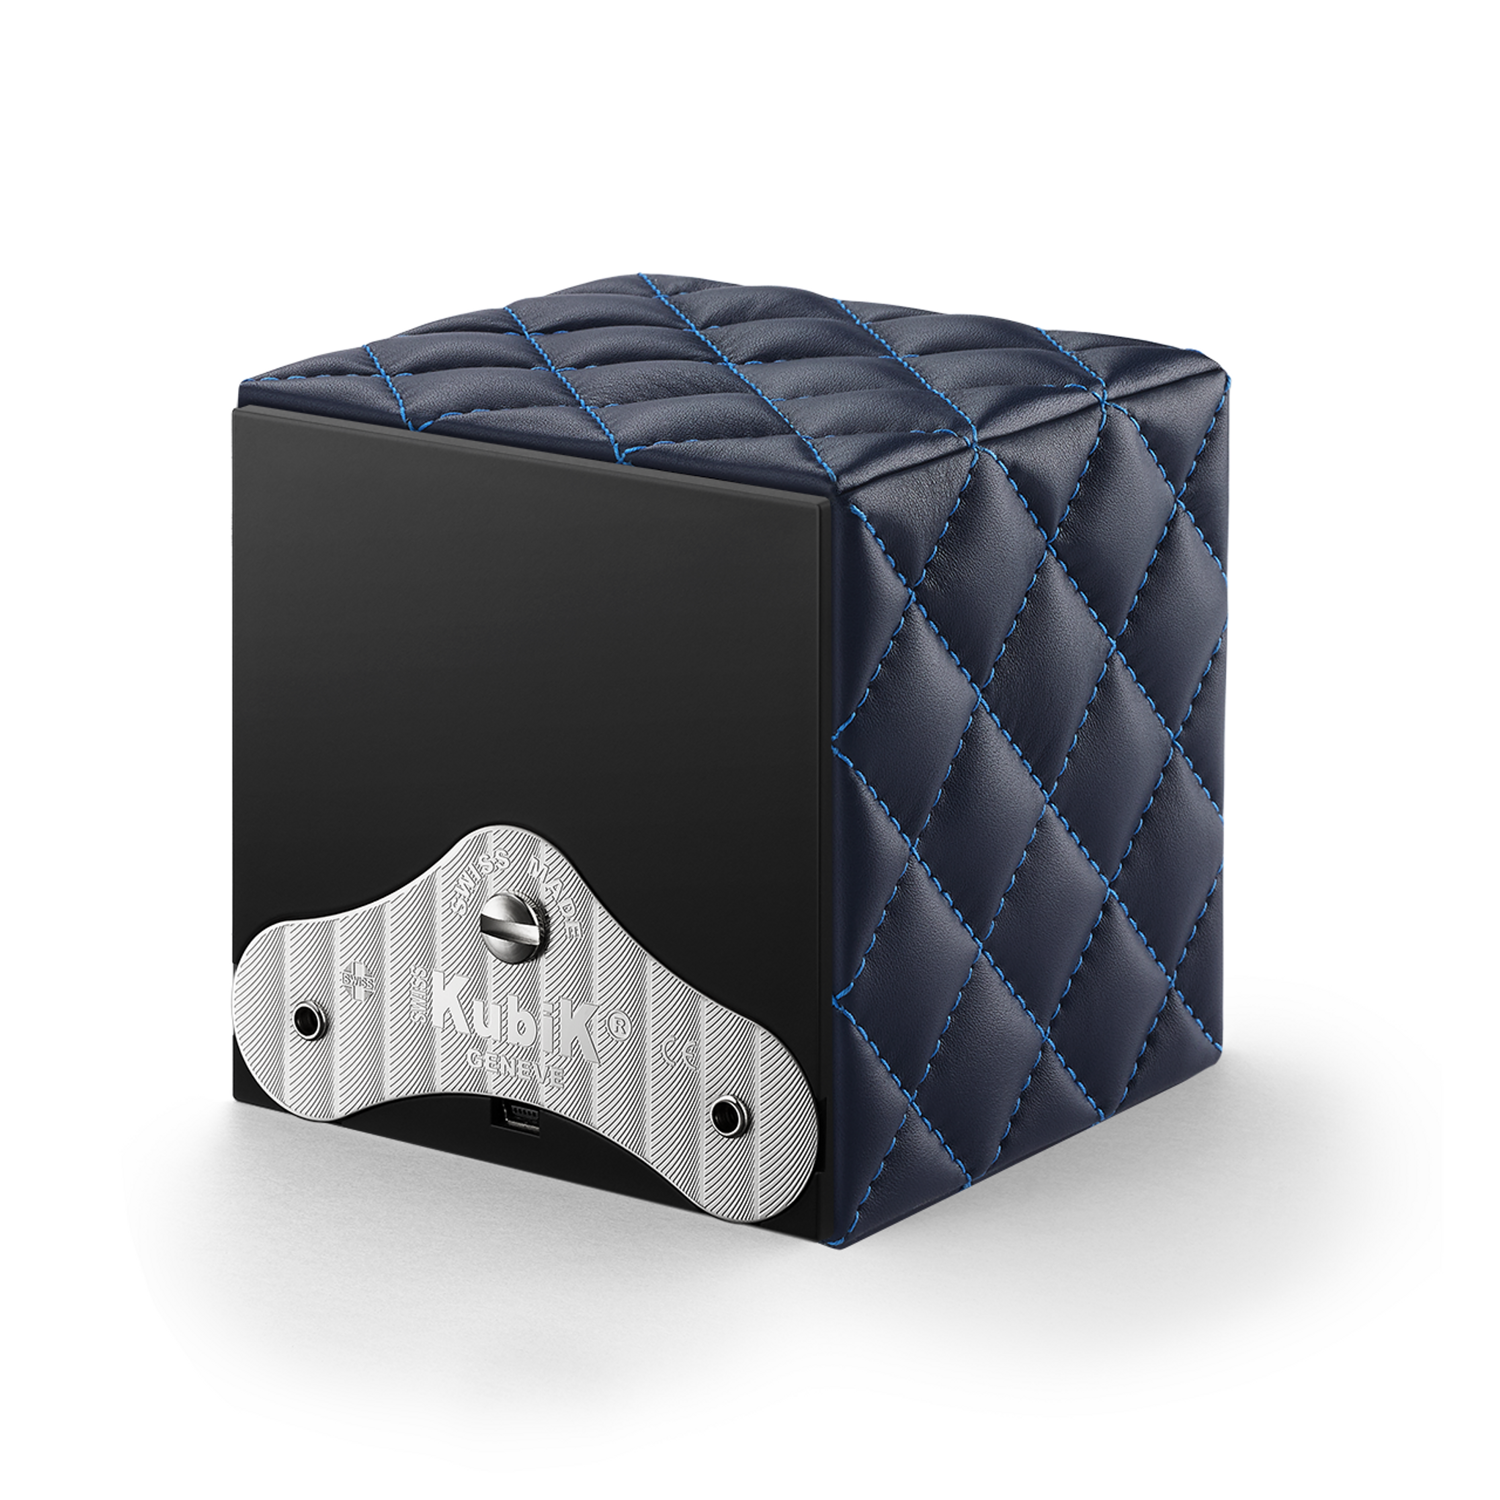 Swiss Kubik Masterbox Couture Black with Blue Stitching